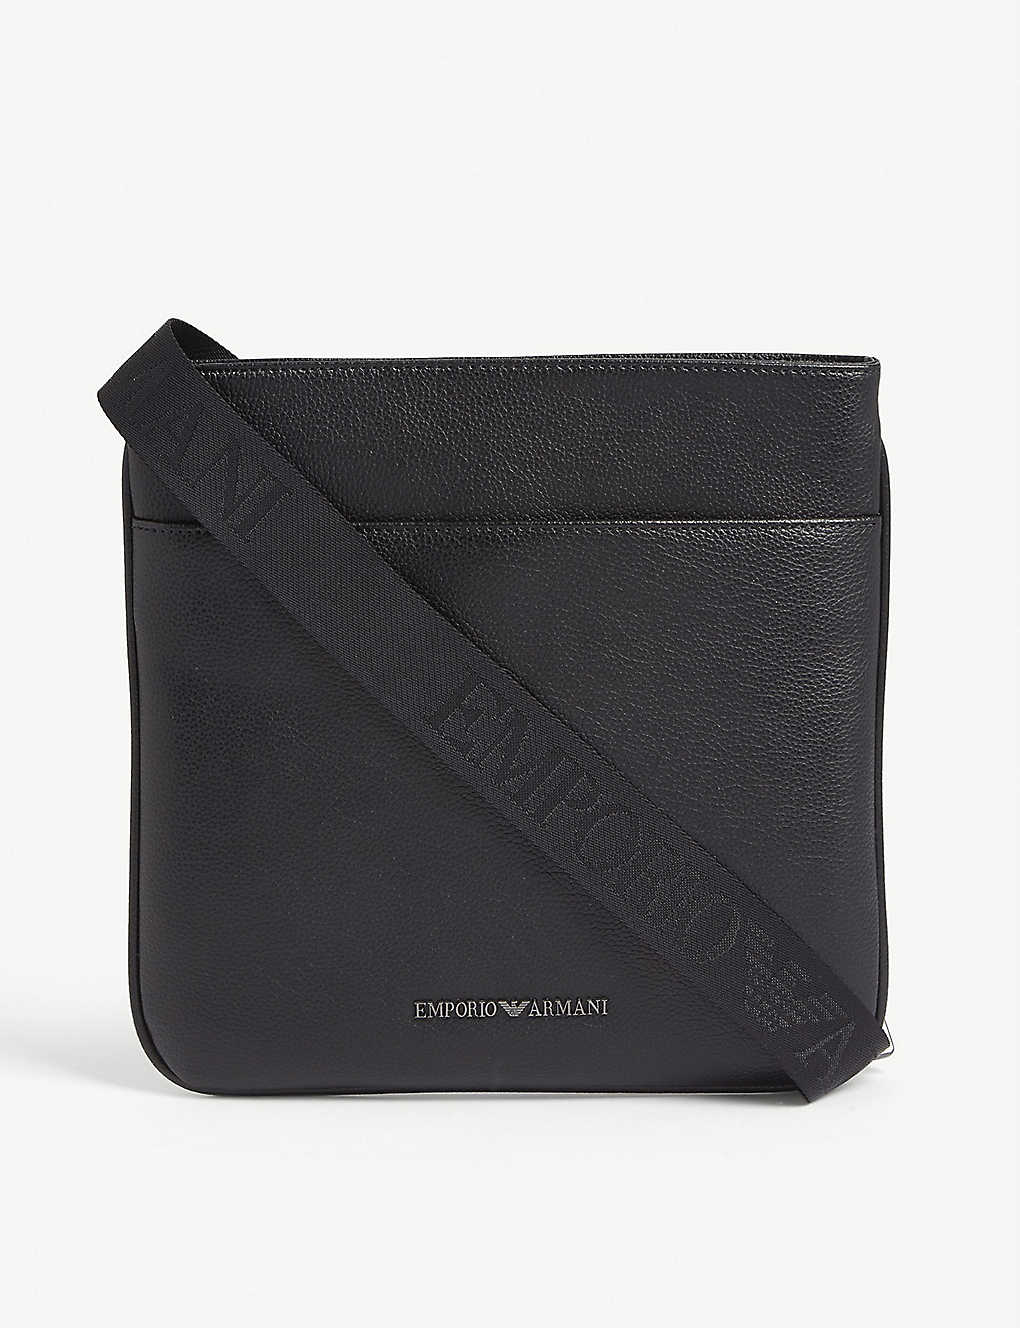 EMPORIO ARMANI - Grained leather messenger bag | Selfridges.com